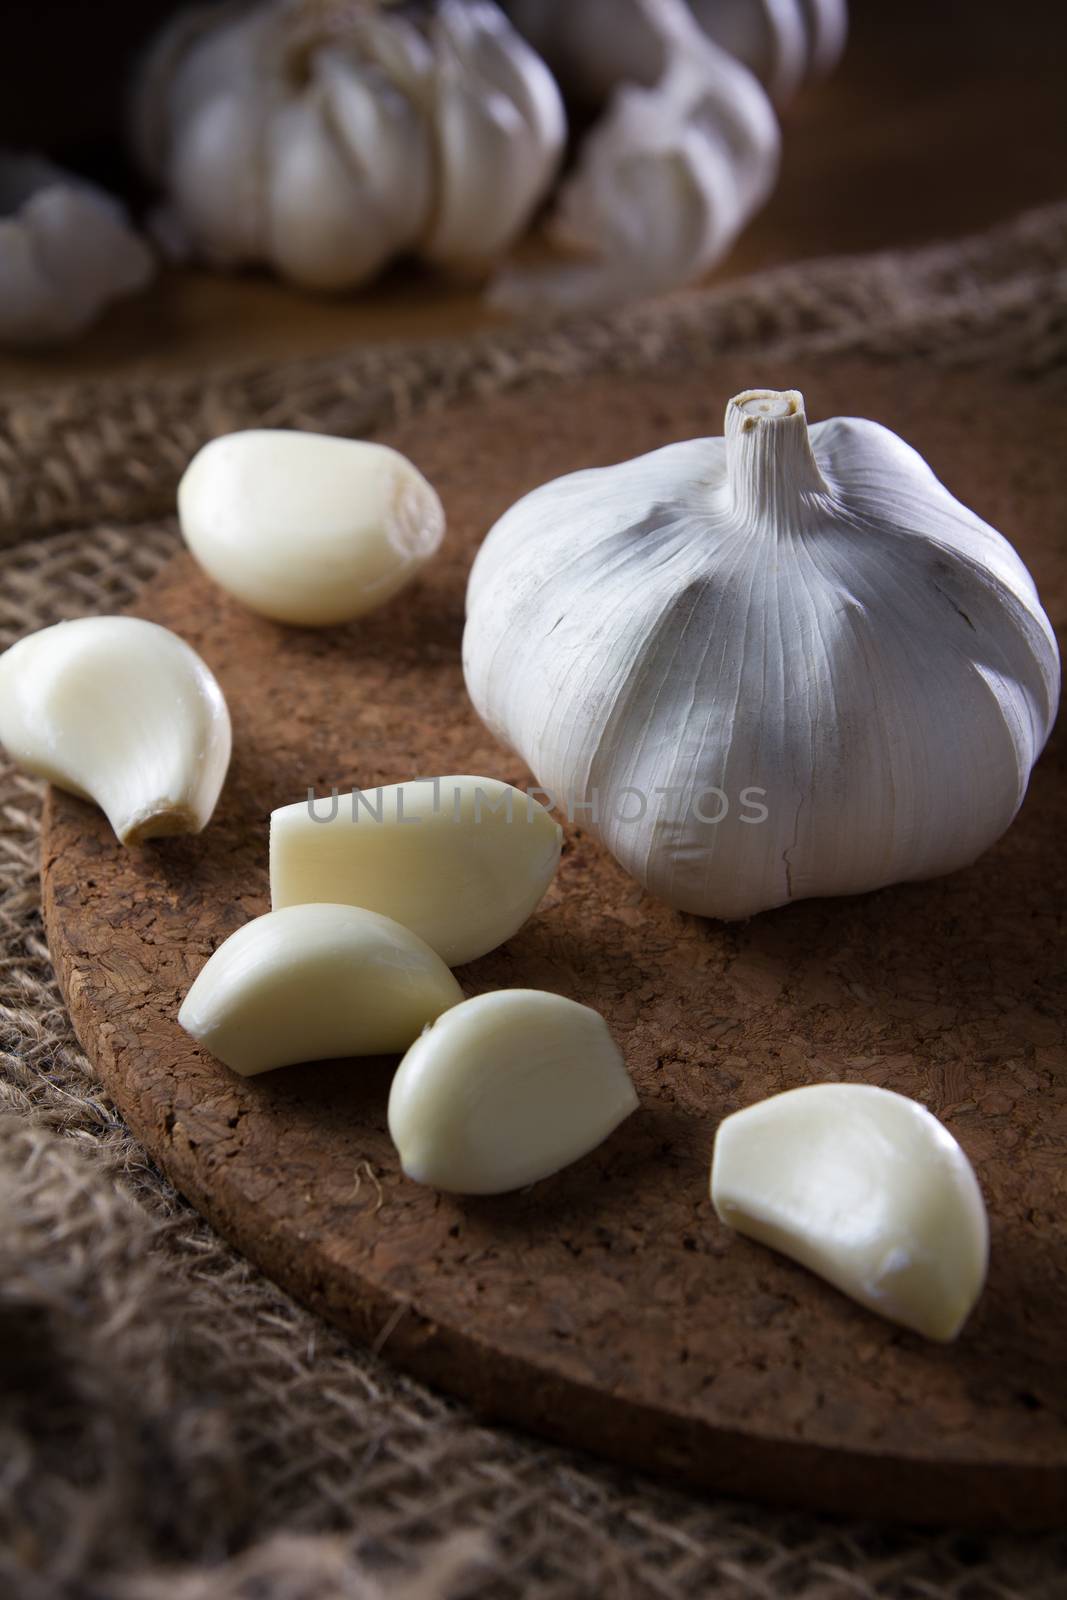 garlic by tehcheesiong